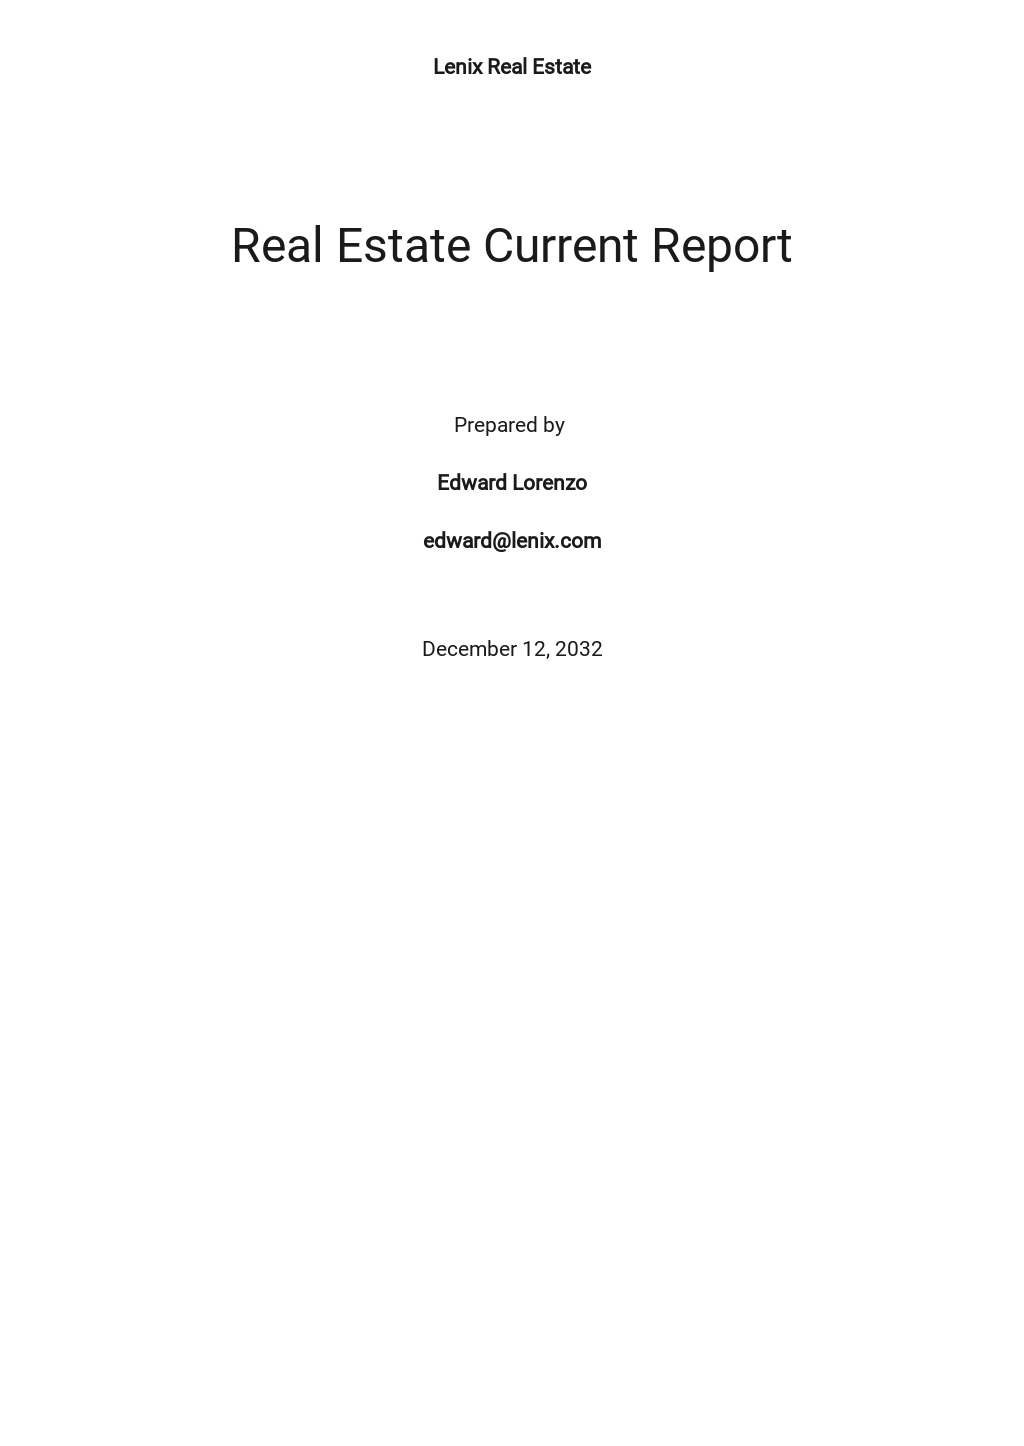 Real Estate Report Template